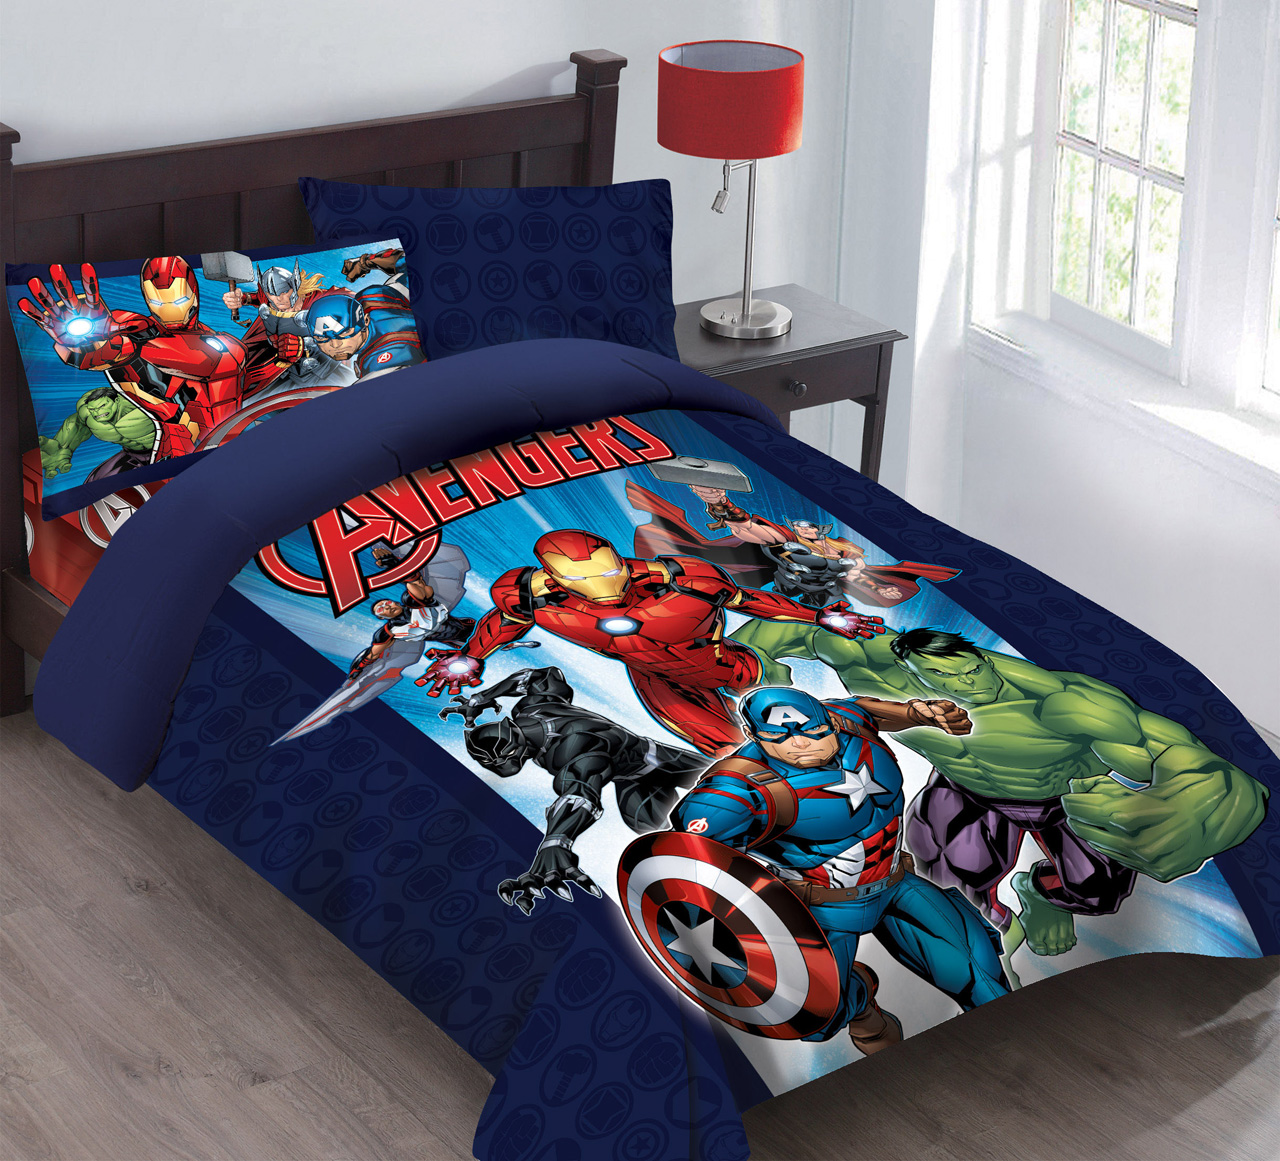 Marvel Avengers Forever Comforter Set with Fitted Sheet